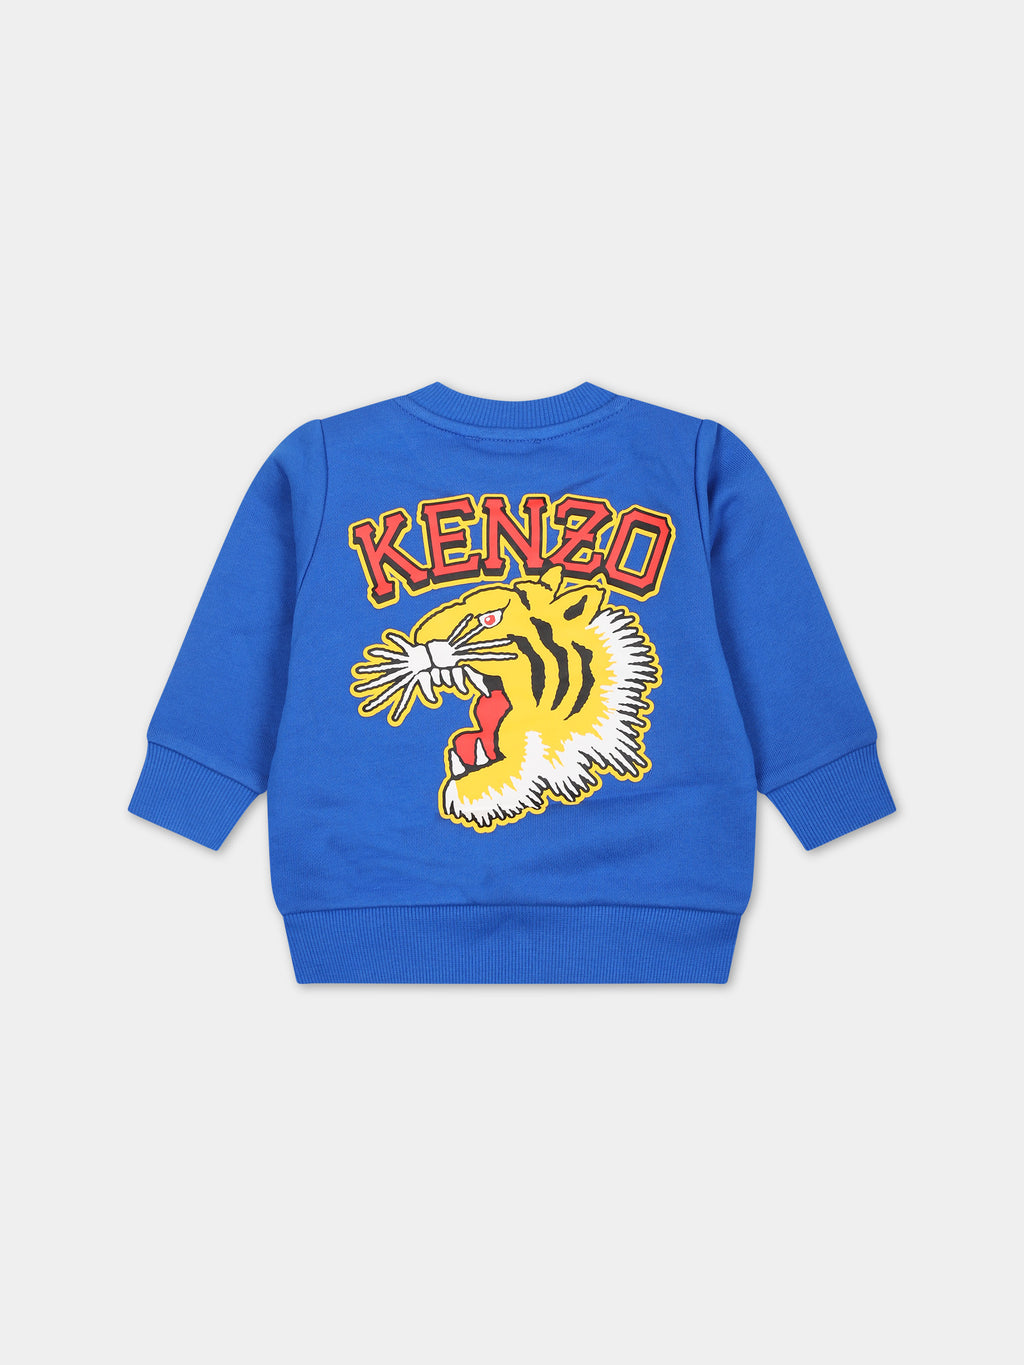 Blue sweatshirt for baby boy with tiger logo